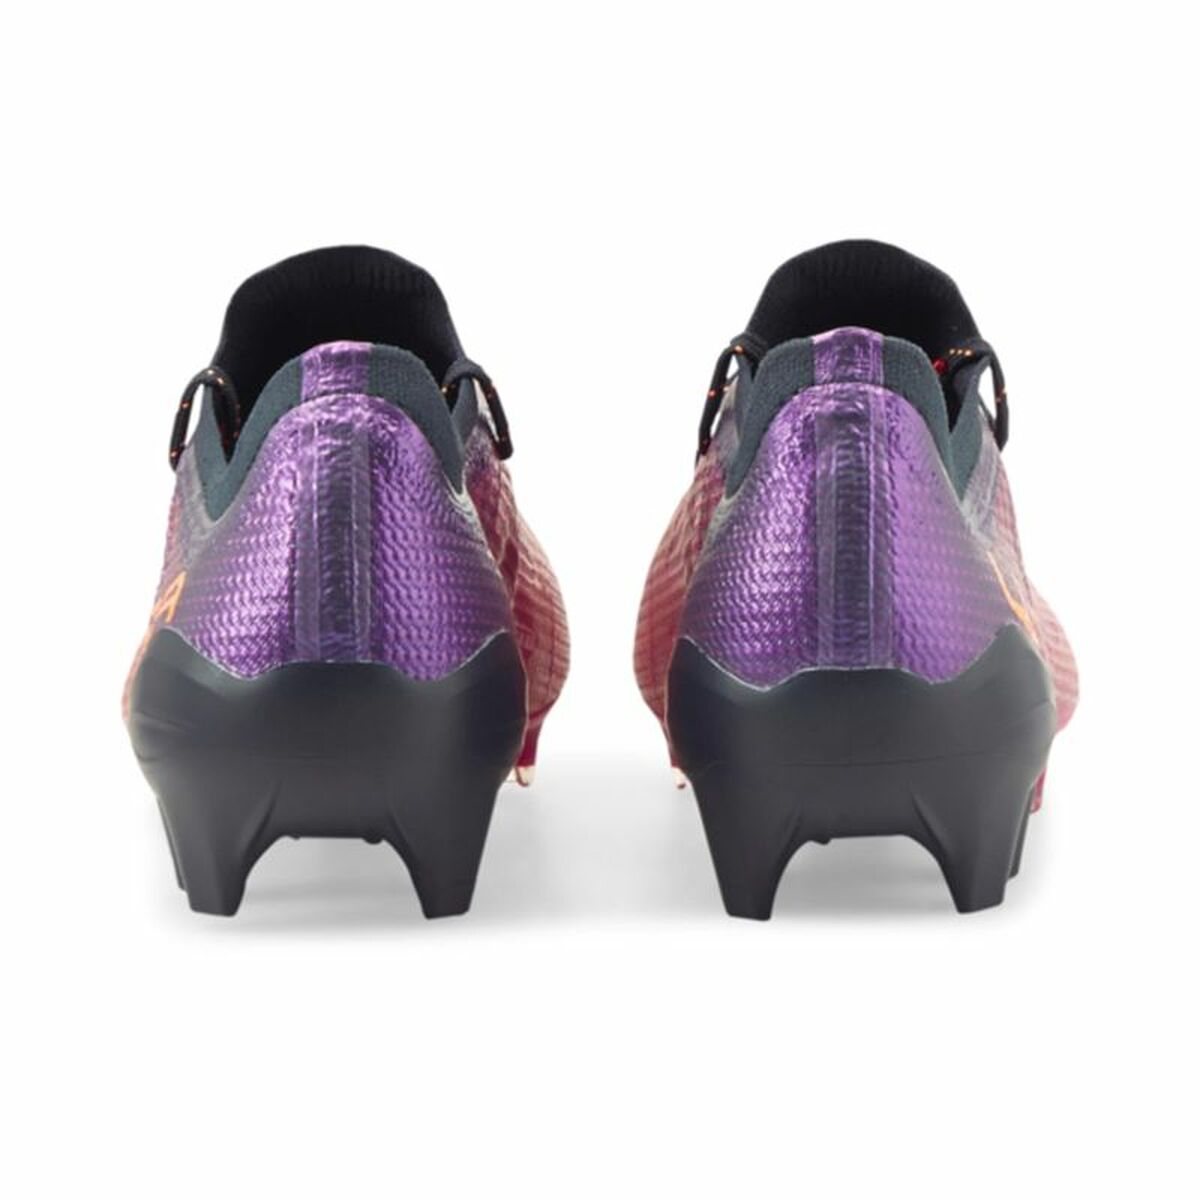 Adult's Football Boots Puma Ultra 1.4 Fg/Ag Purple